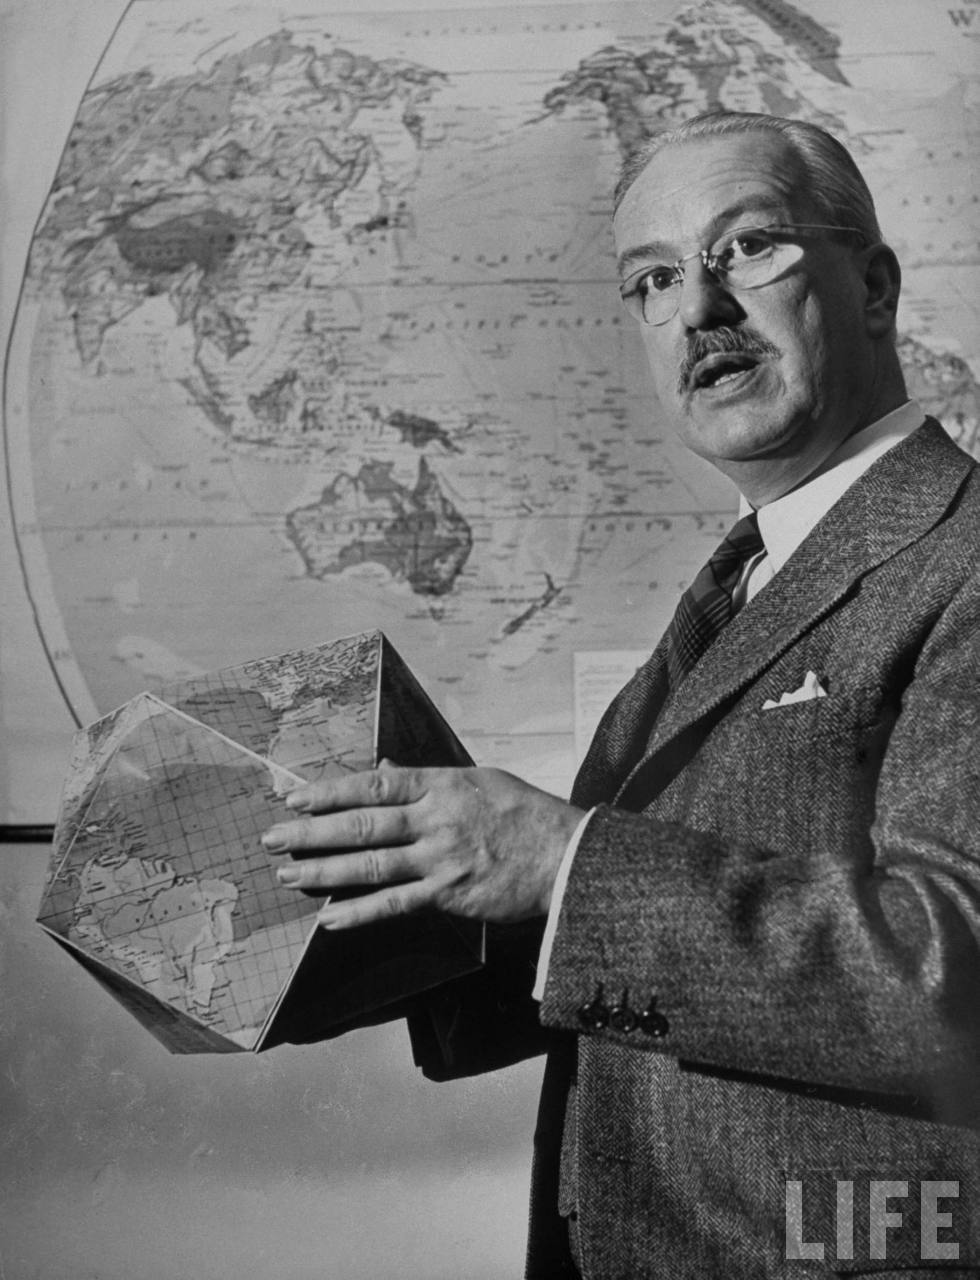 Buckminster Fuller, 1943 cubo-octahedron Dymaxion map